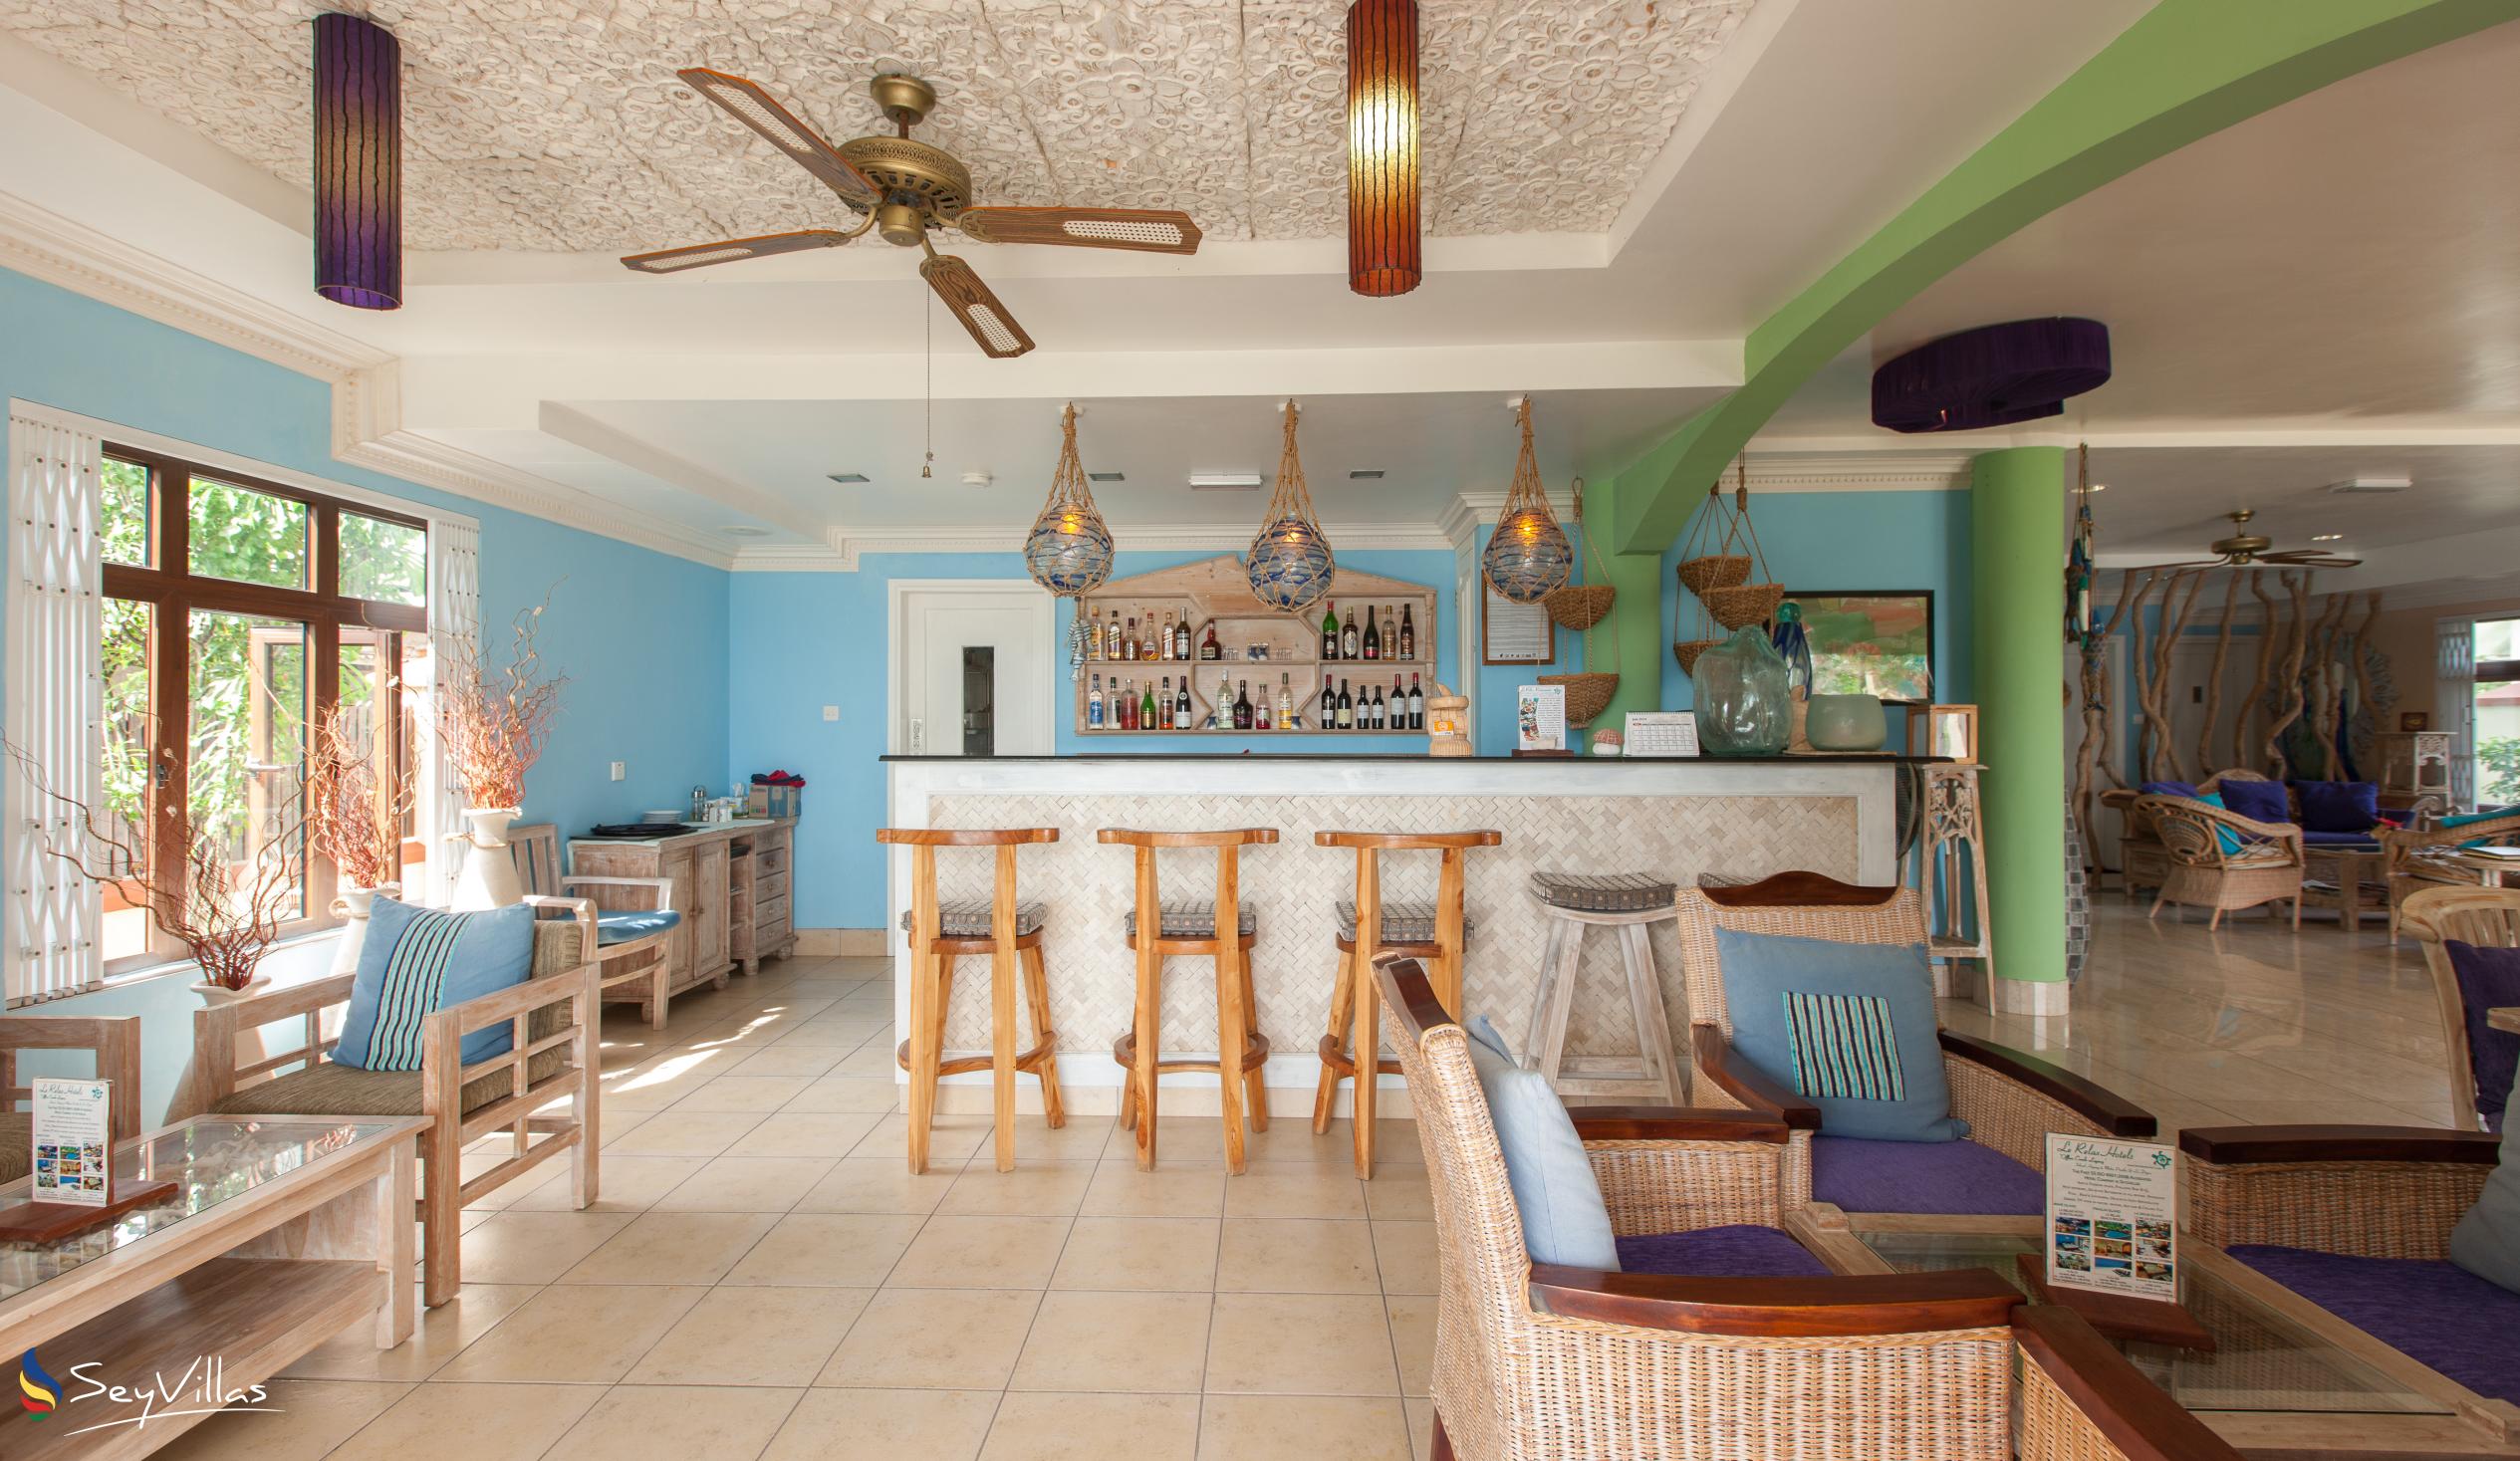 Foto 7: Le Relax Beach House - Innenbereich - La Digue (Seychellen)